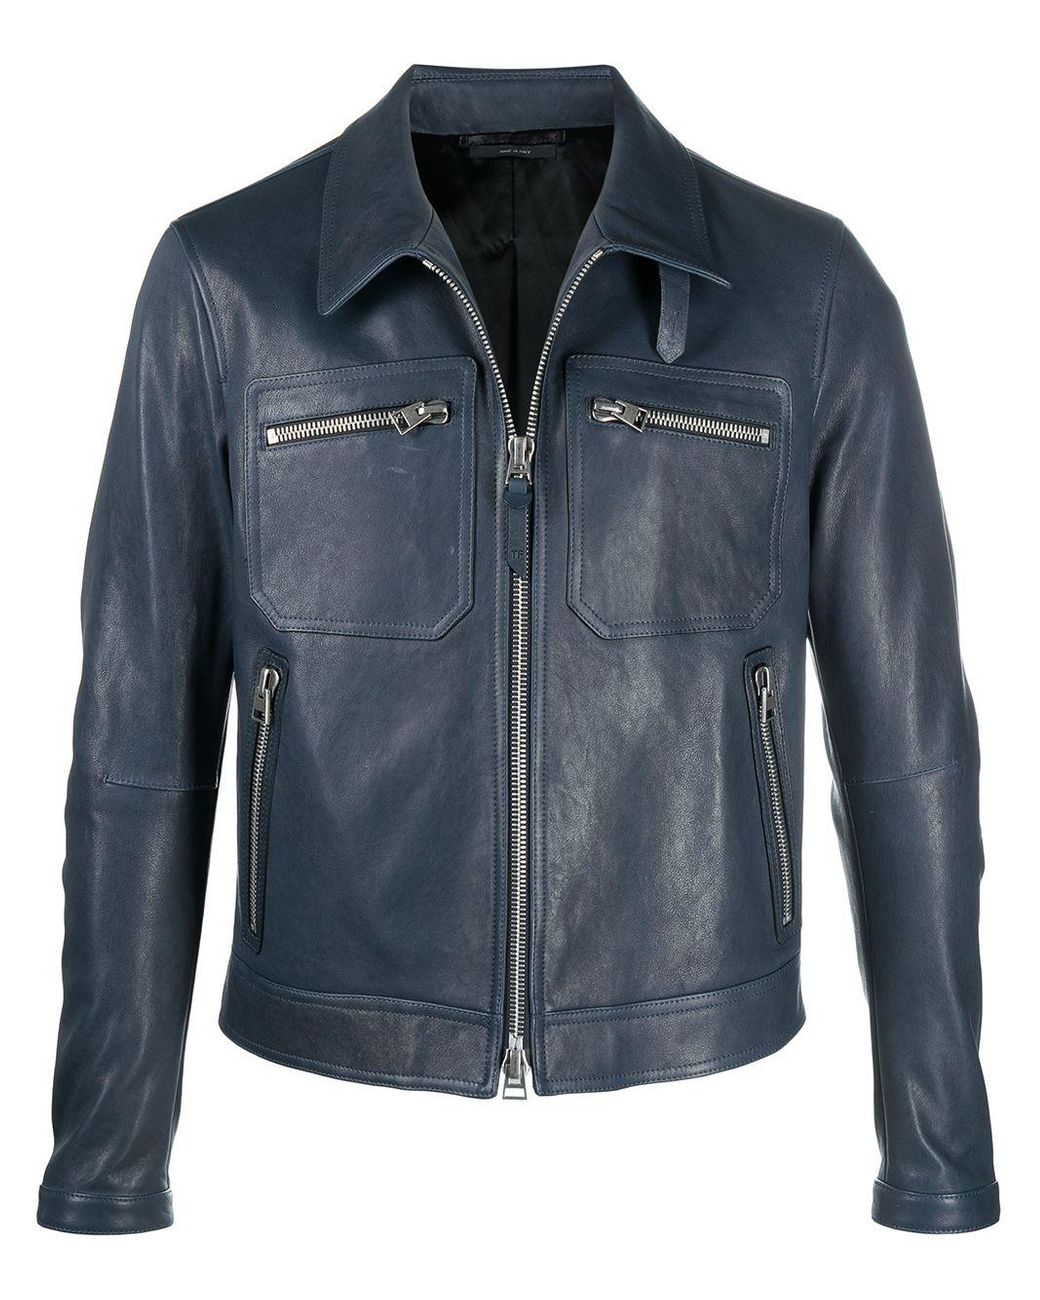 Tom Ford Zip-pocket Leather Jacket in Blue for Men - Lyst